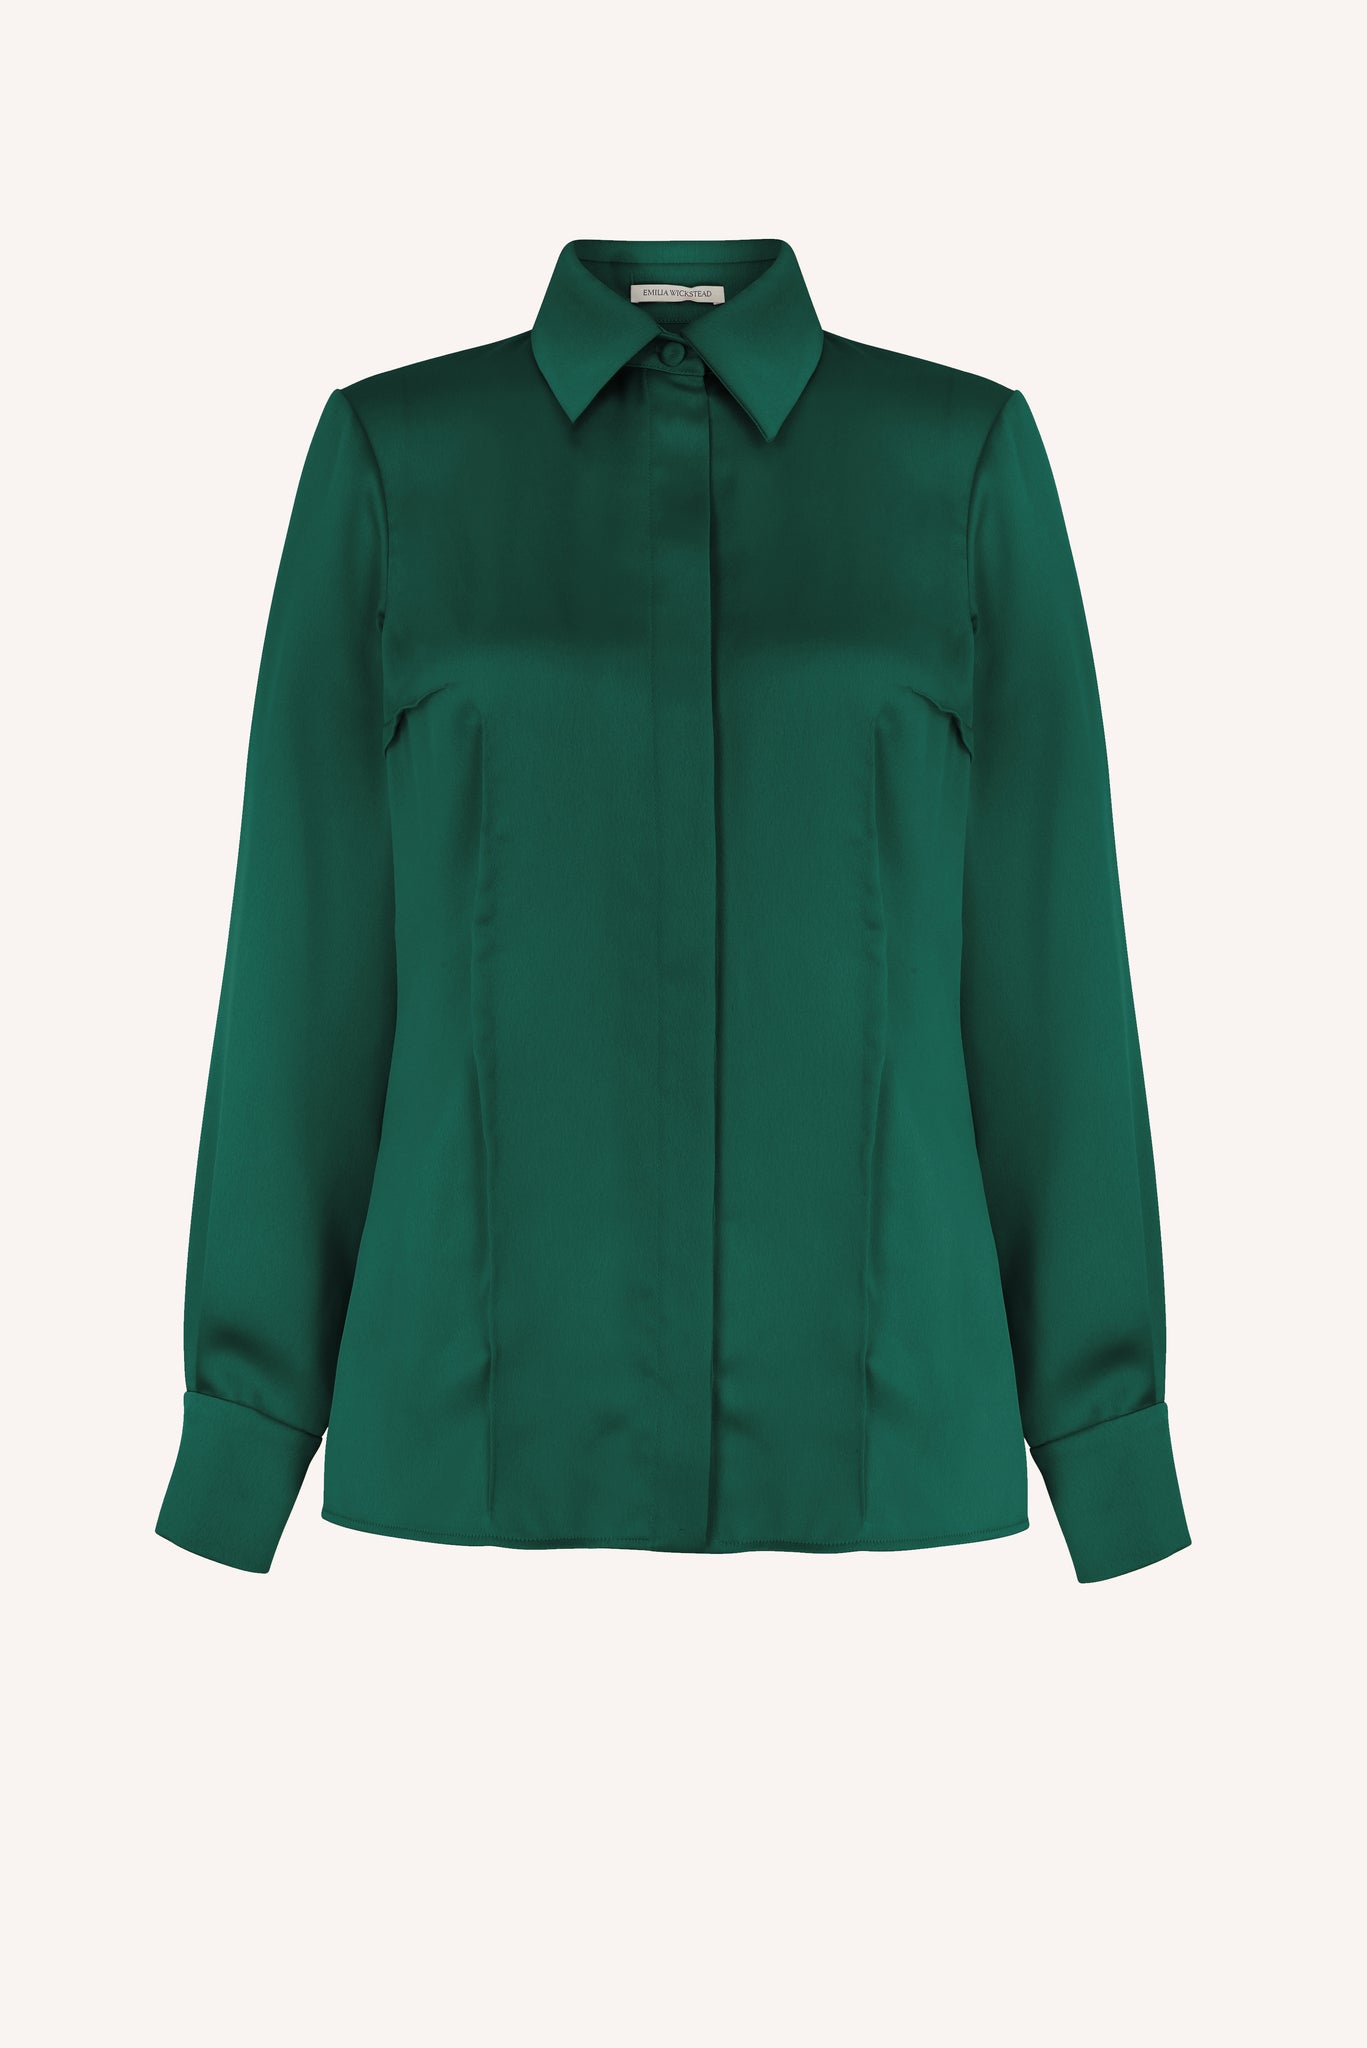 Ravanne Emerald Green Satin Shirt | Emilia Wickstead